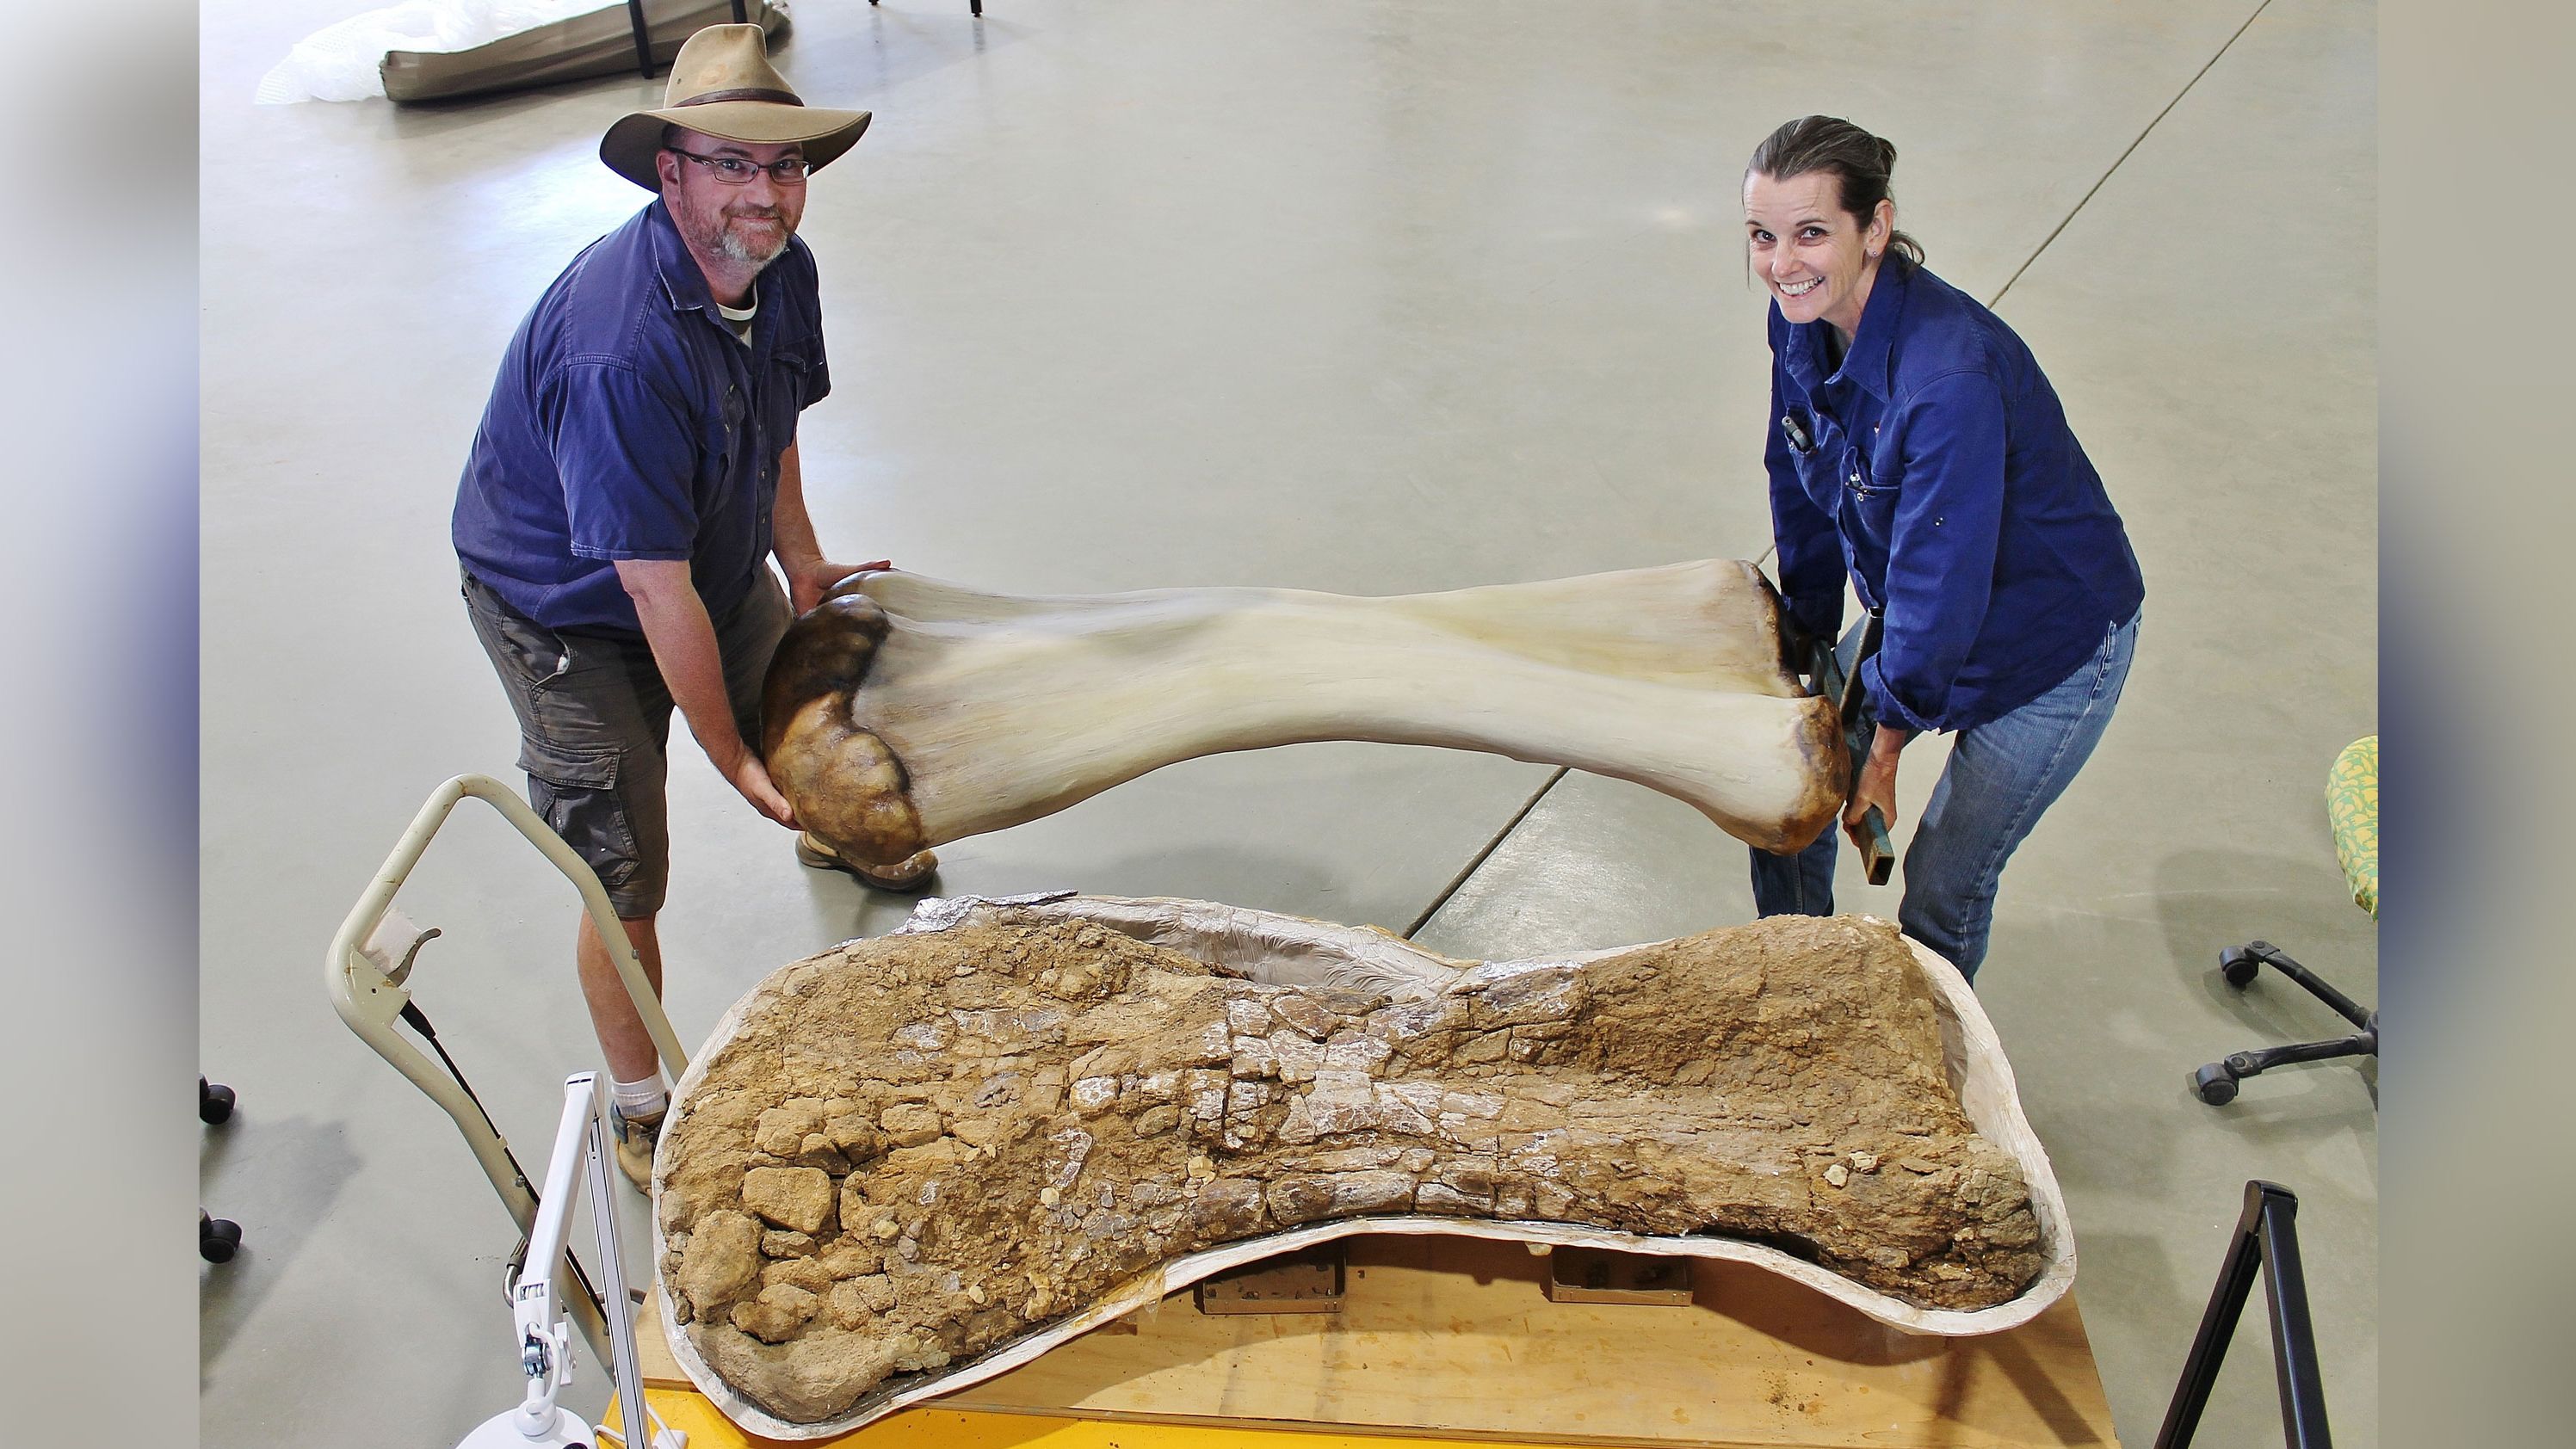 Bones of the Australotitan cooperensis, the largest dinosaur found in Australia.